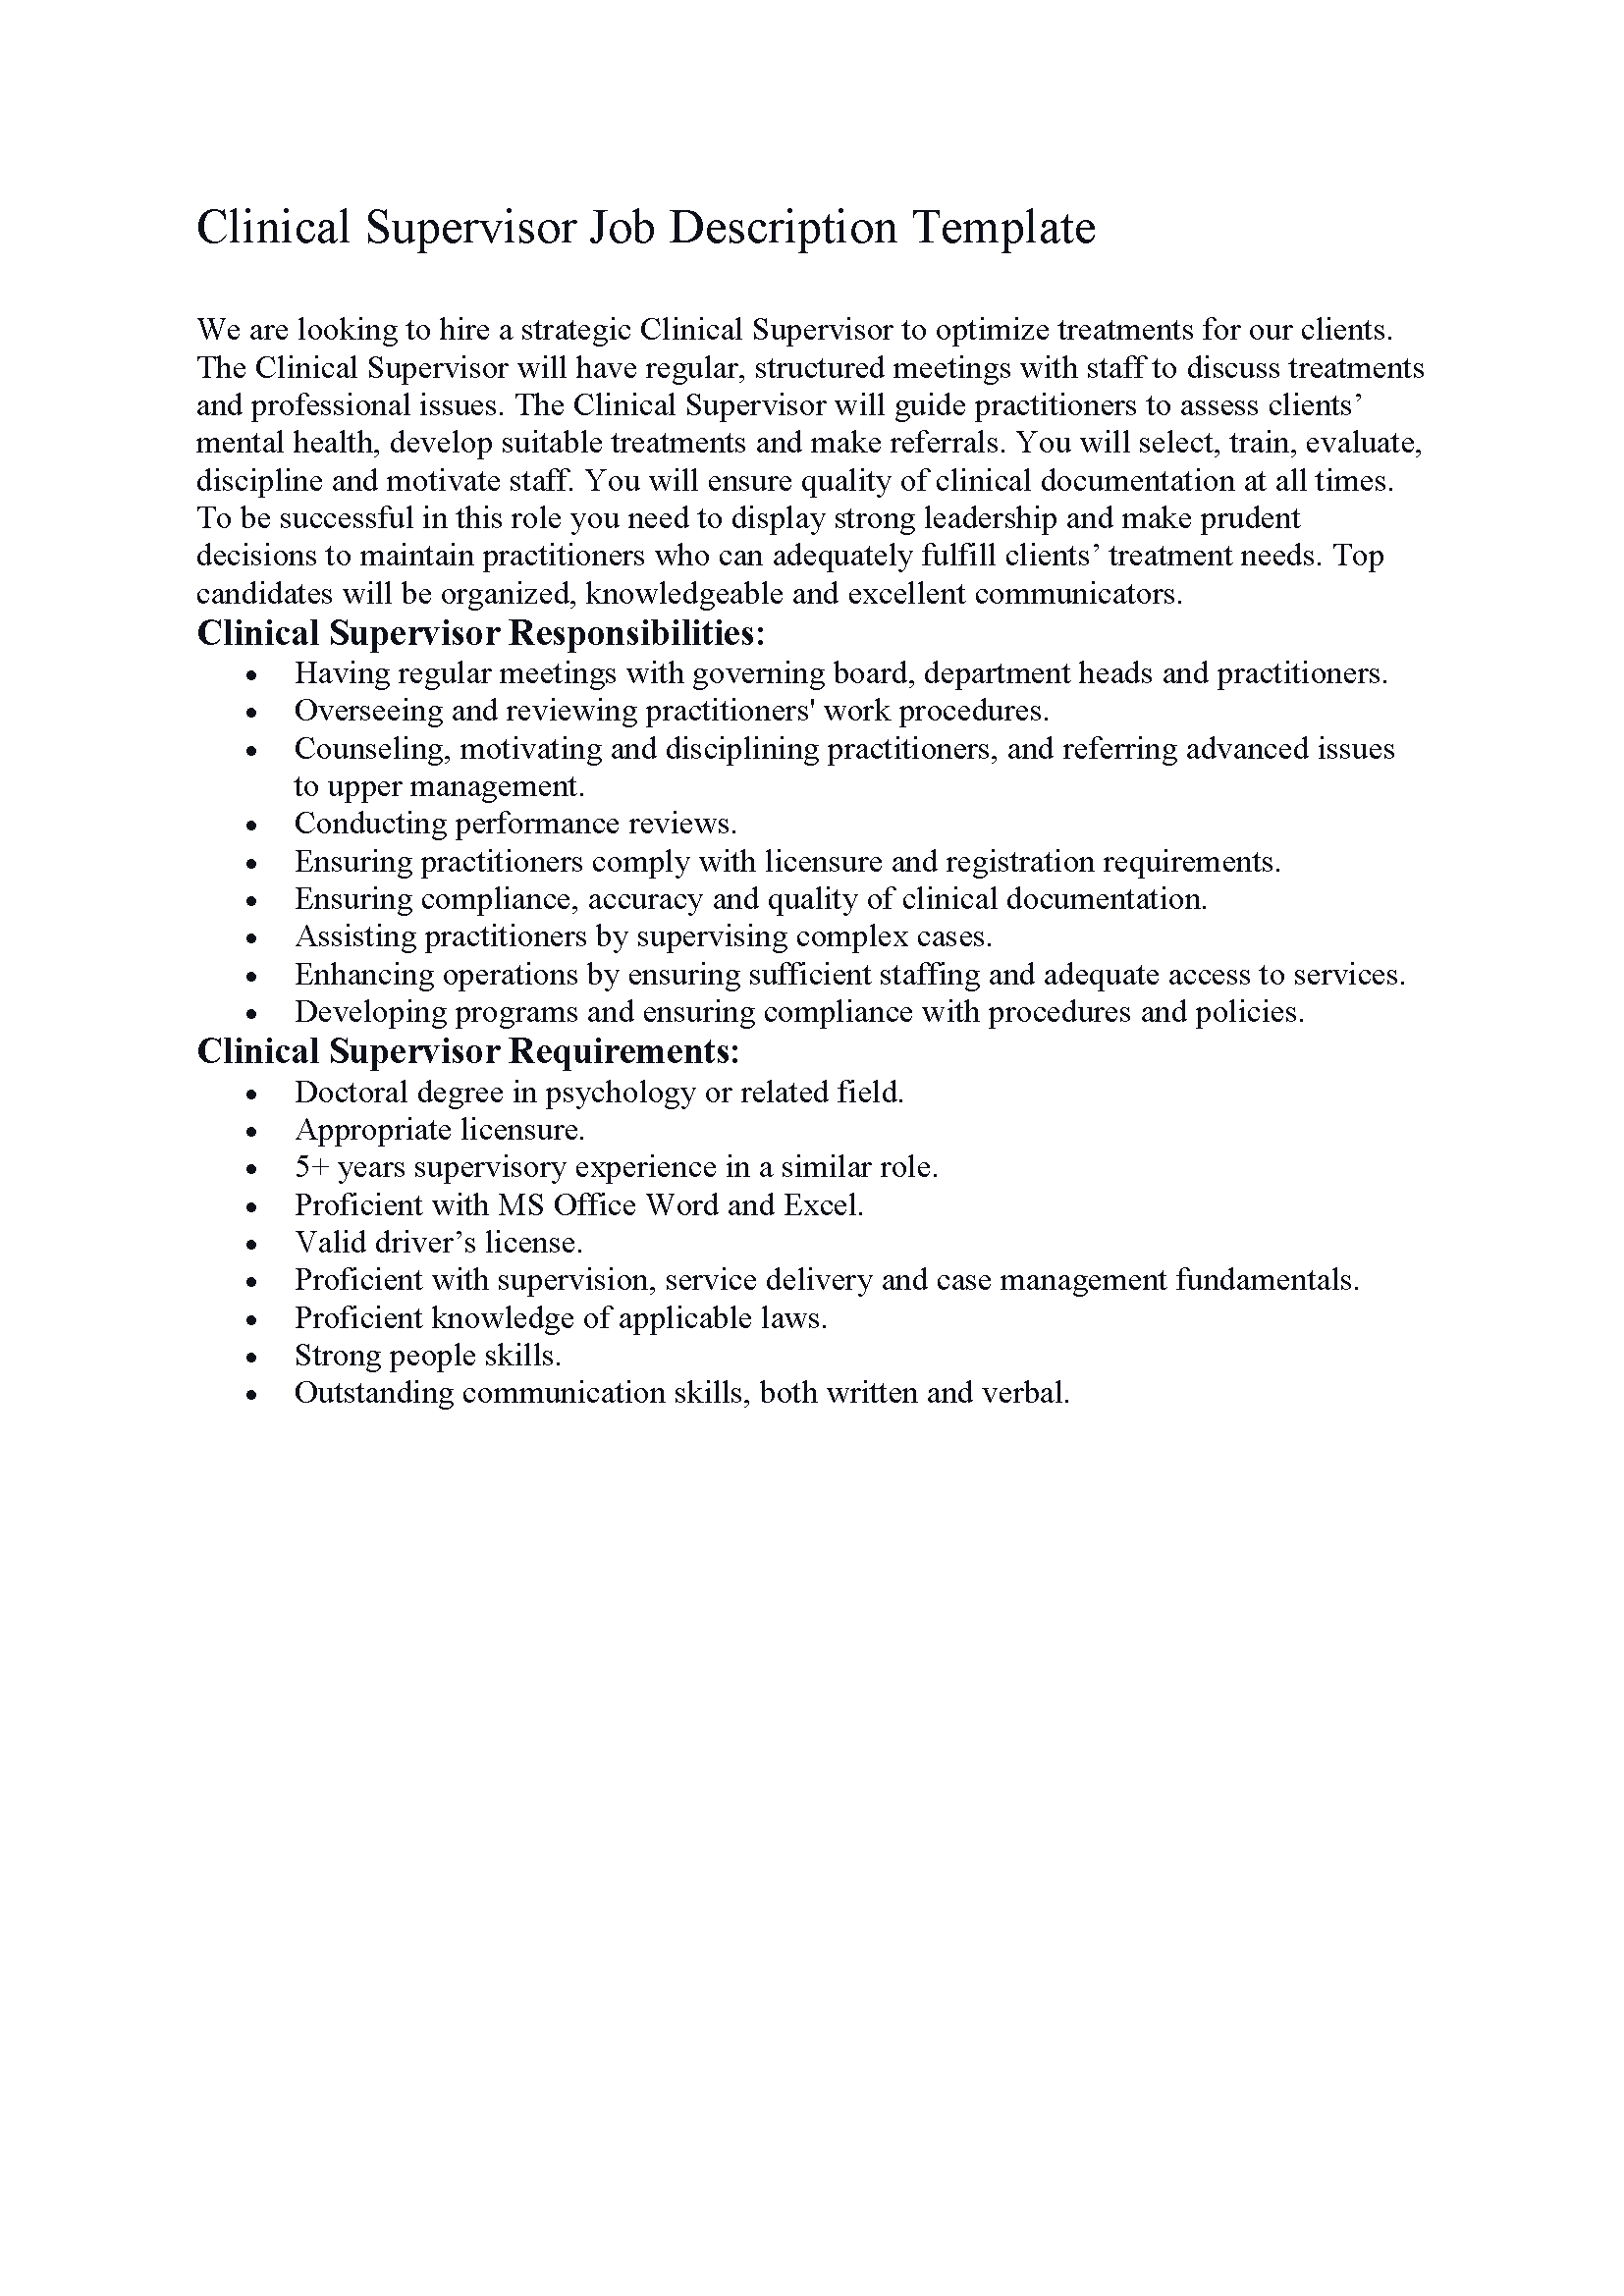 Clinical Supervisor Job Description Template